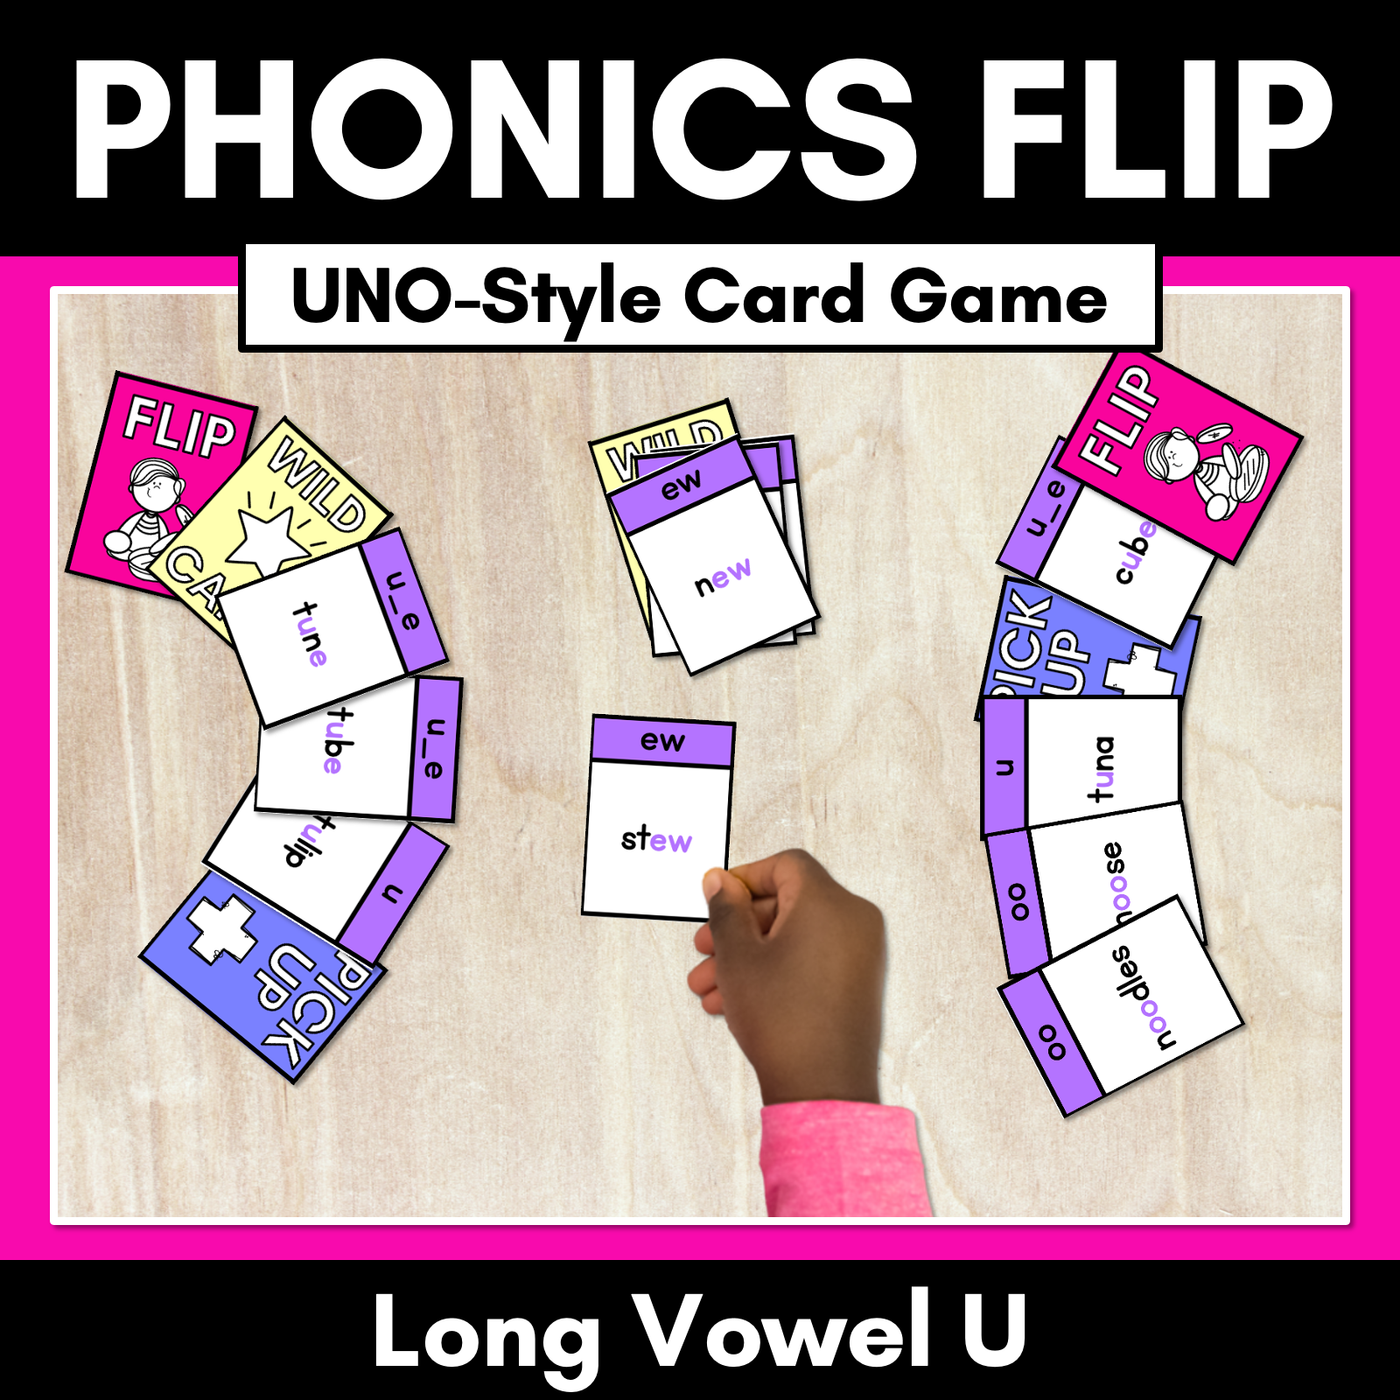 Long Vowel U Card Game - Phonics Flip for Long Vowel Sounds